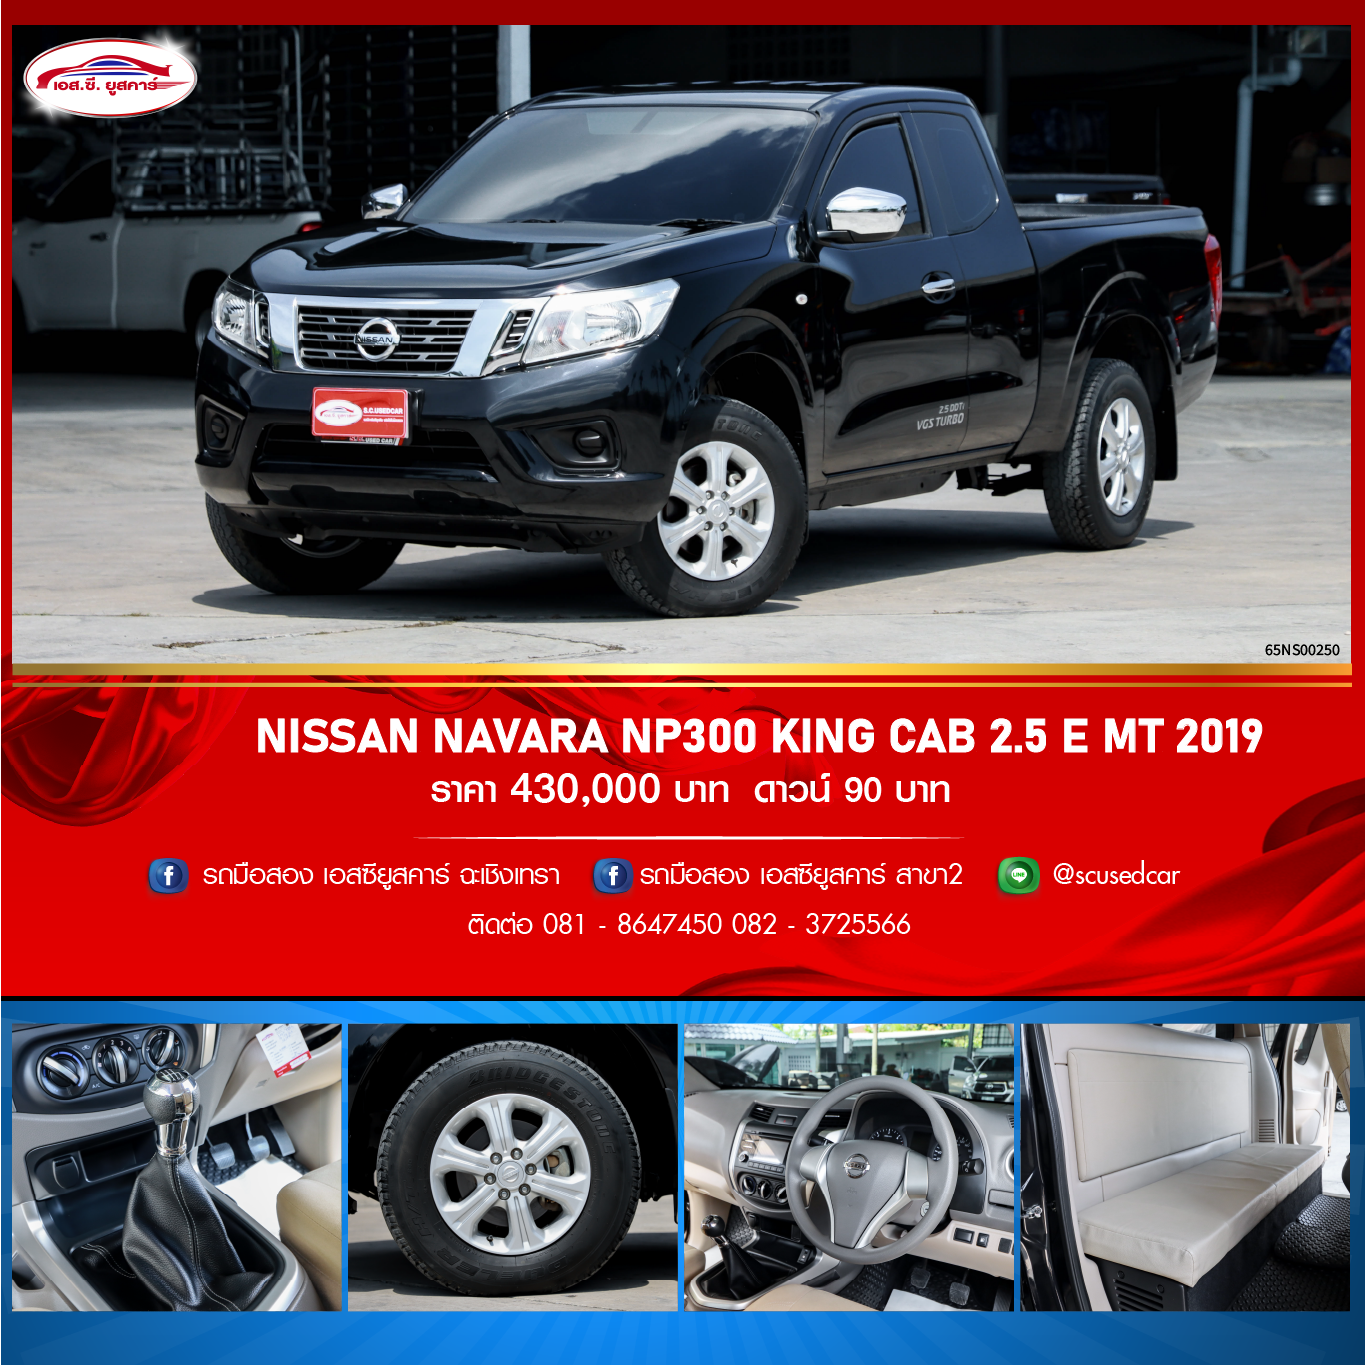 NISSAN NAVARA NP300 KING CAB 2.5 E MT 2019